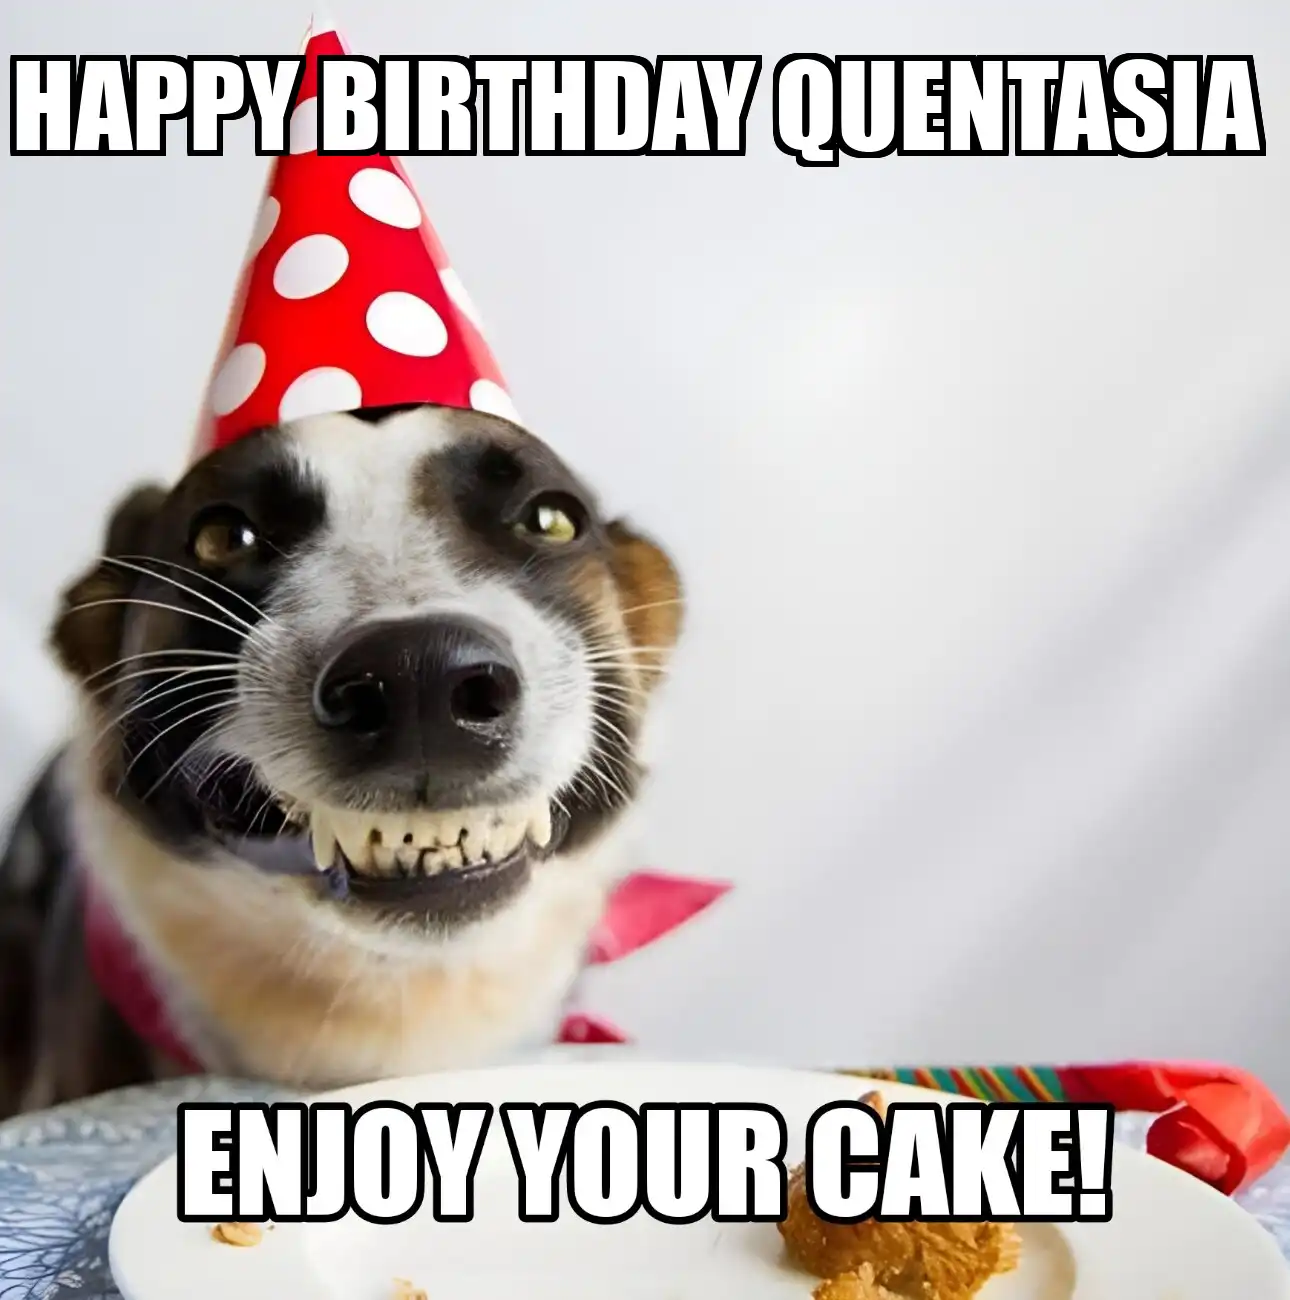 Happy Birthday Quentasia Enjoy Your Cake Dog Meme